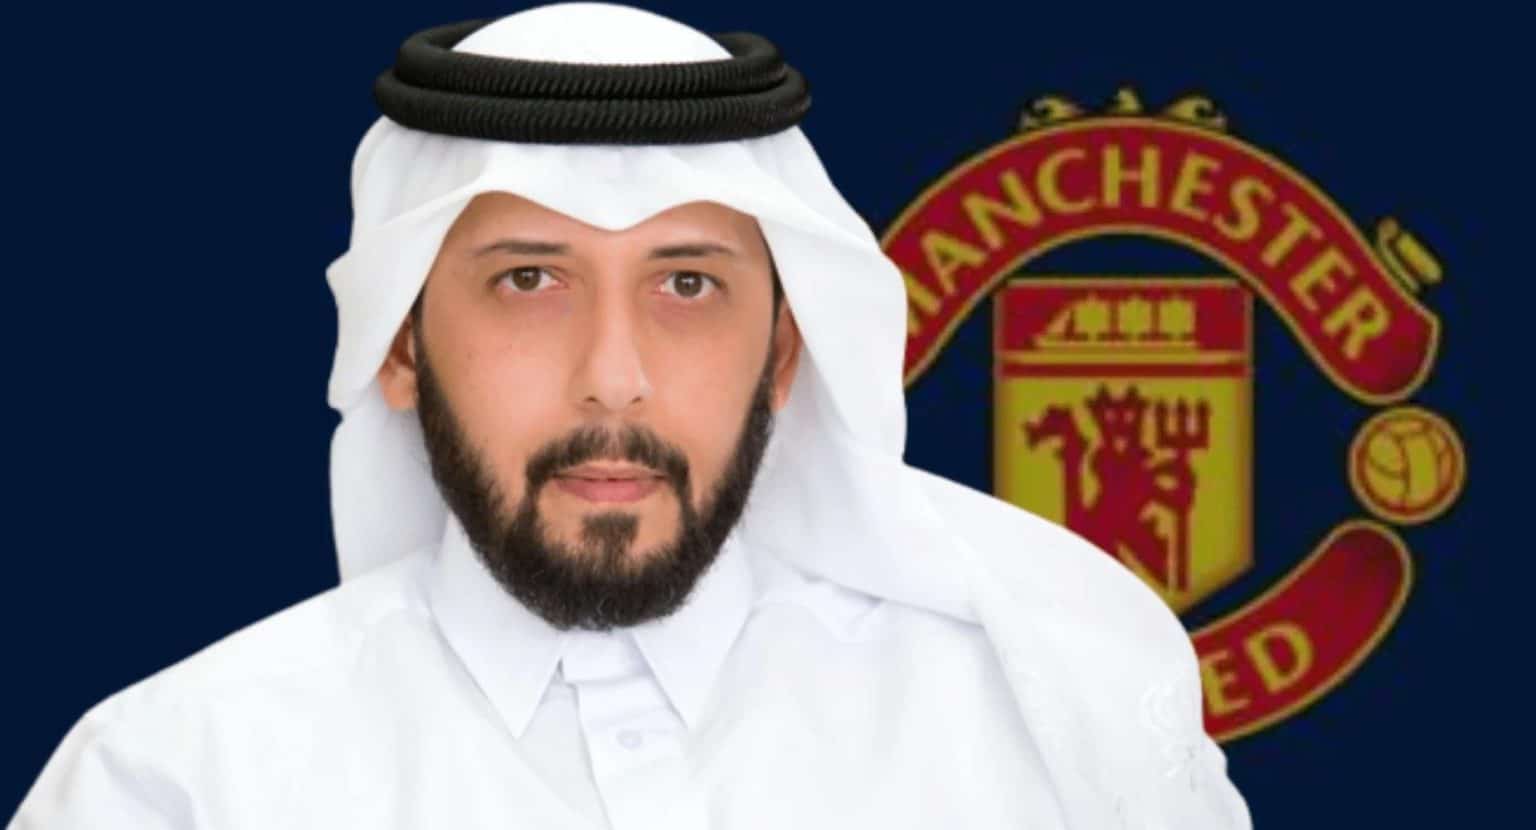 Sheikh Jassim bin Hamad Al Than, bids for Manchester United